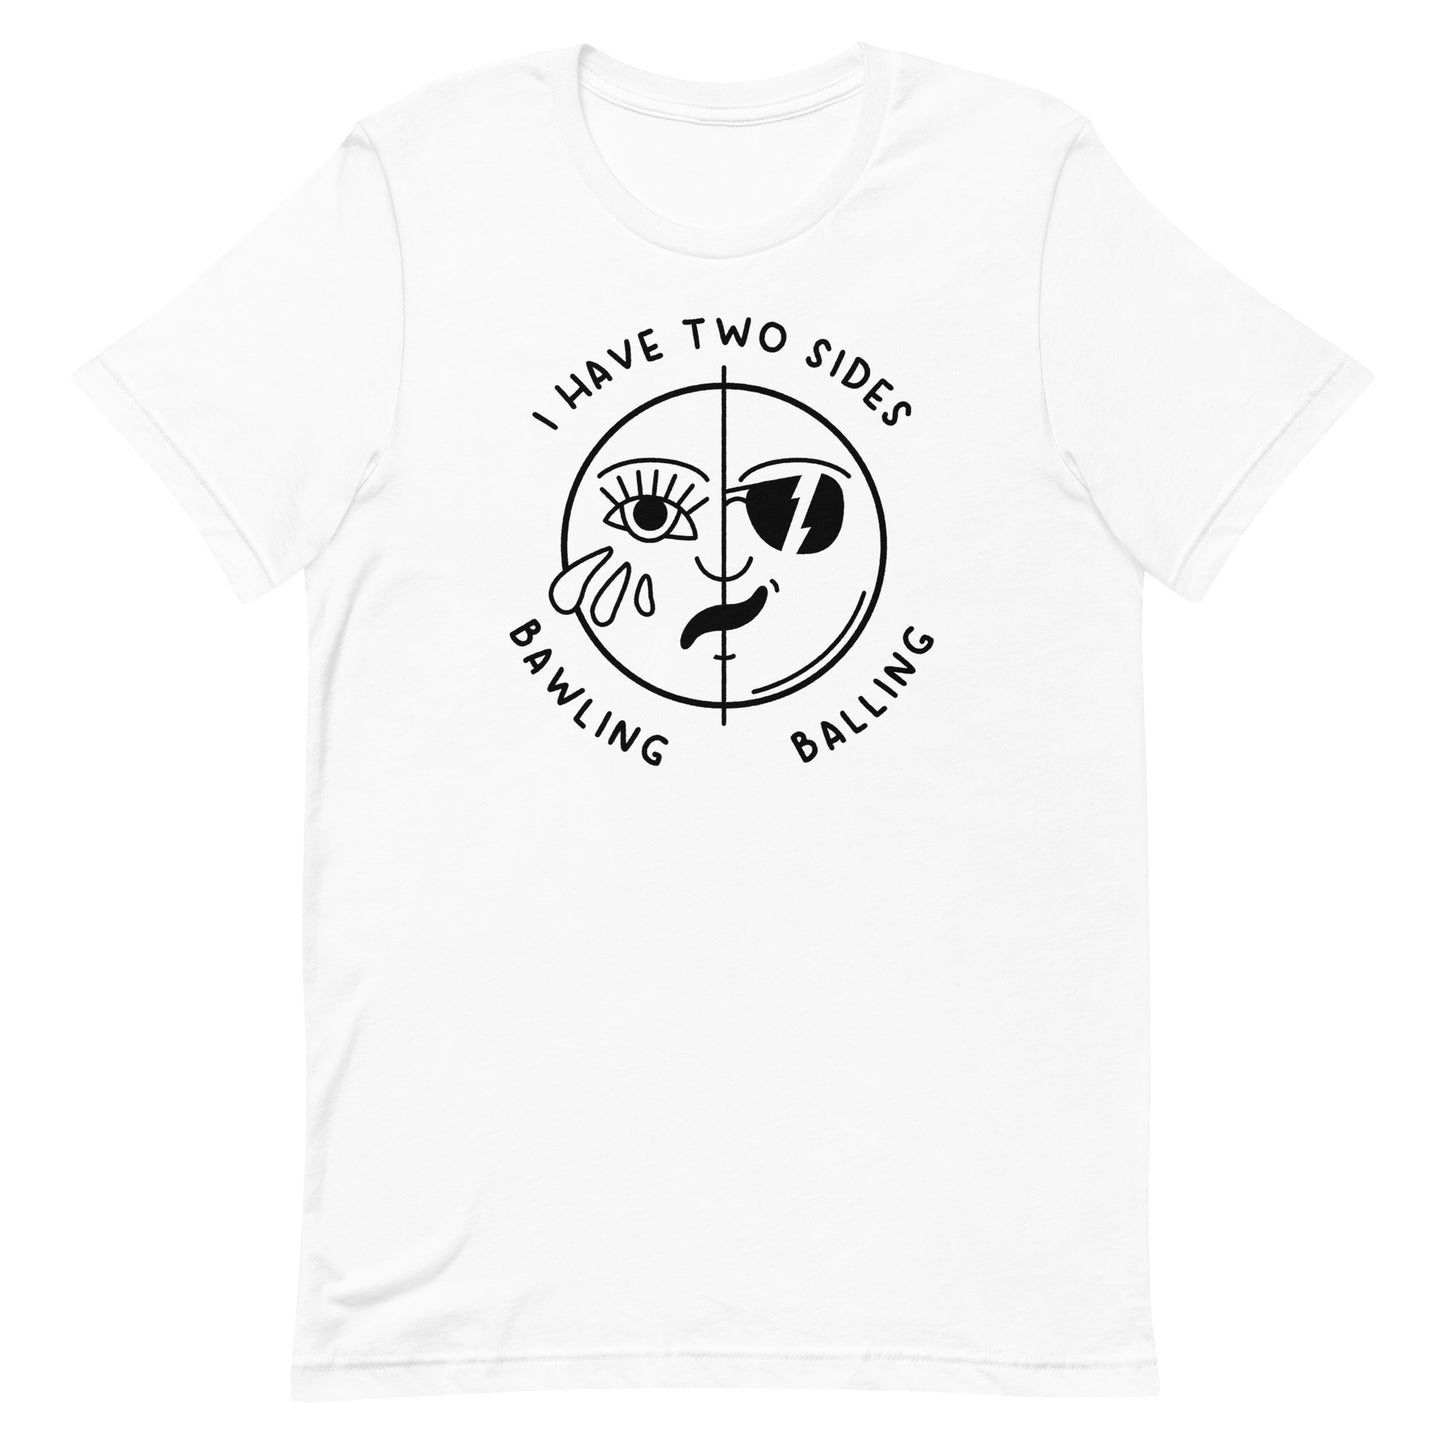 Bawling/Balling Unisex t-shirt